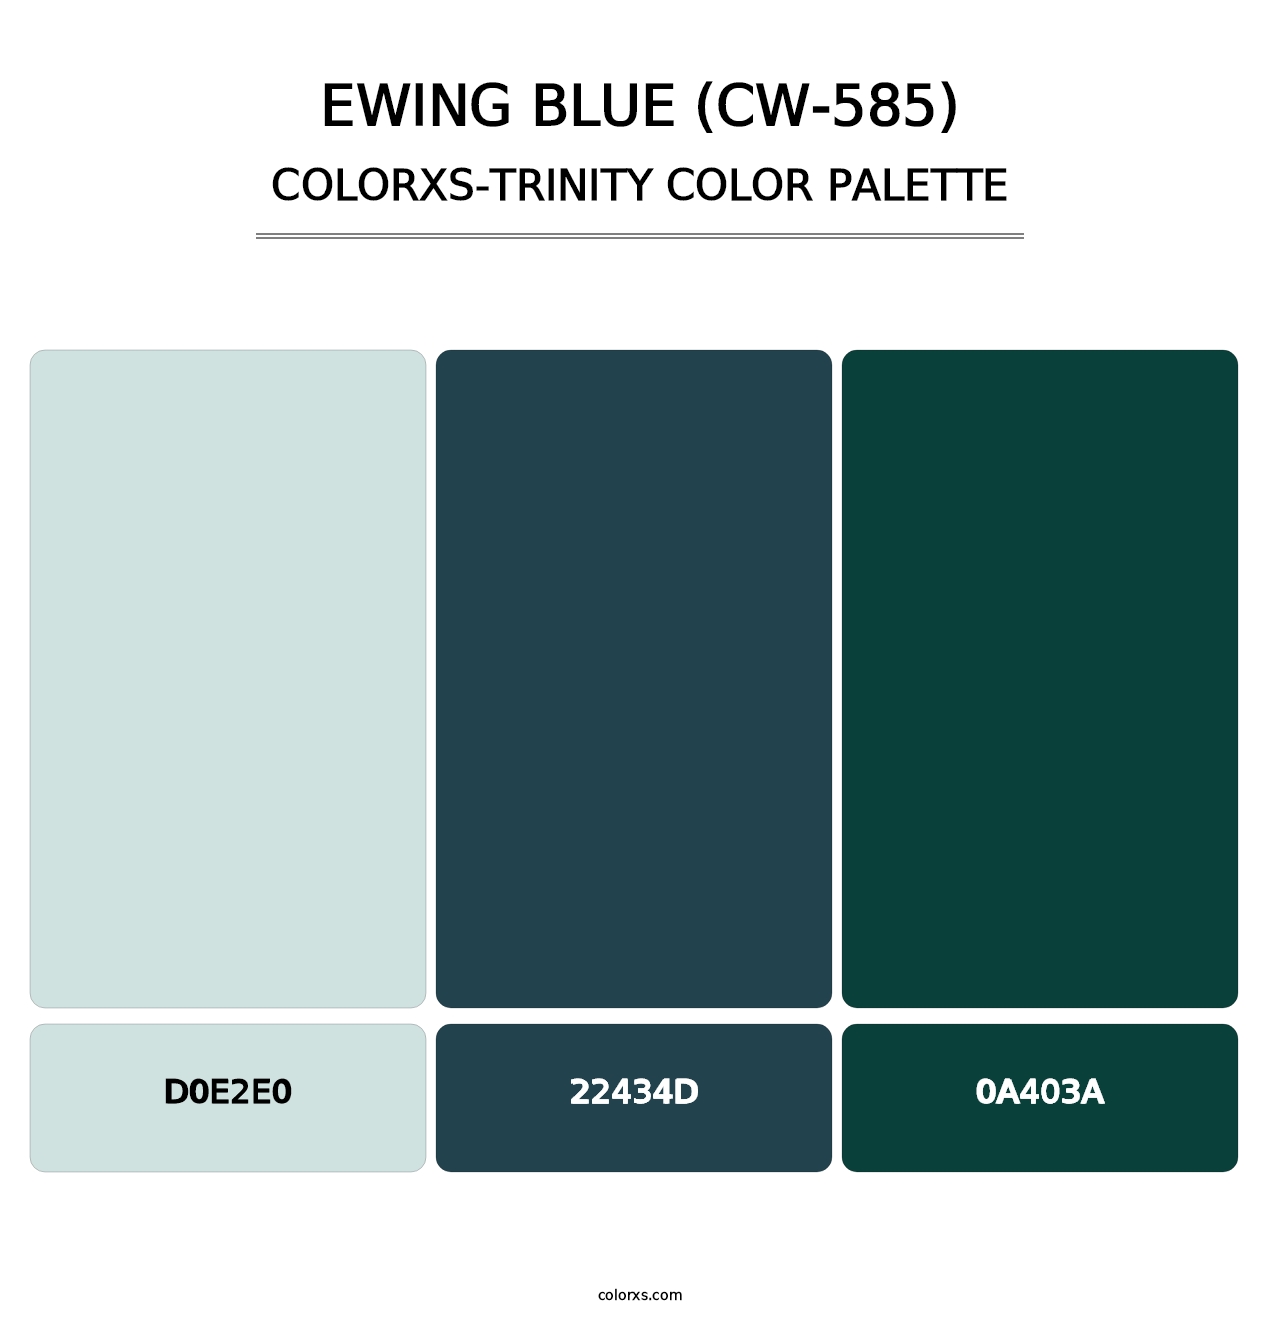 Ewing Blue (CW-585) - Colorxs Trinity Palette